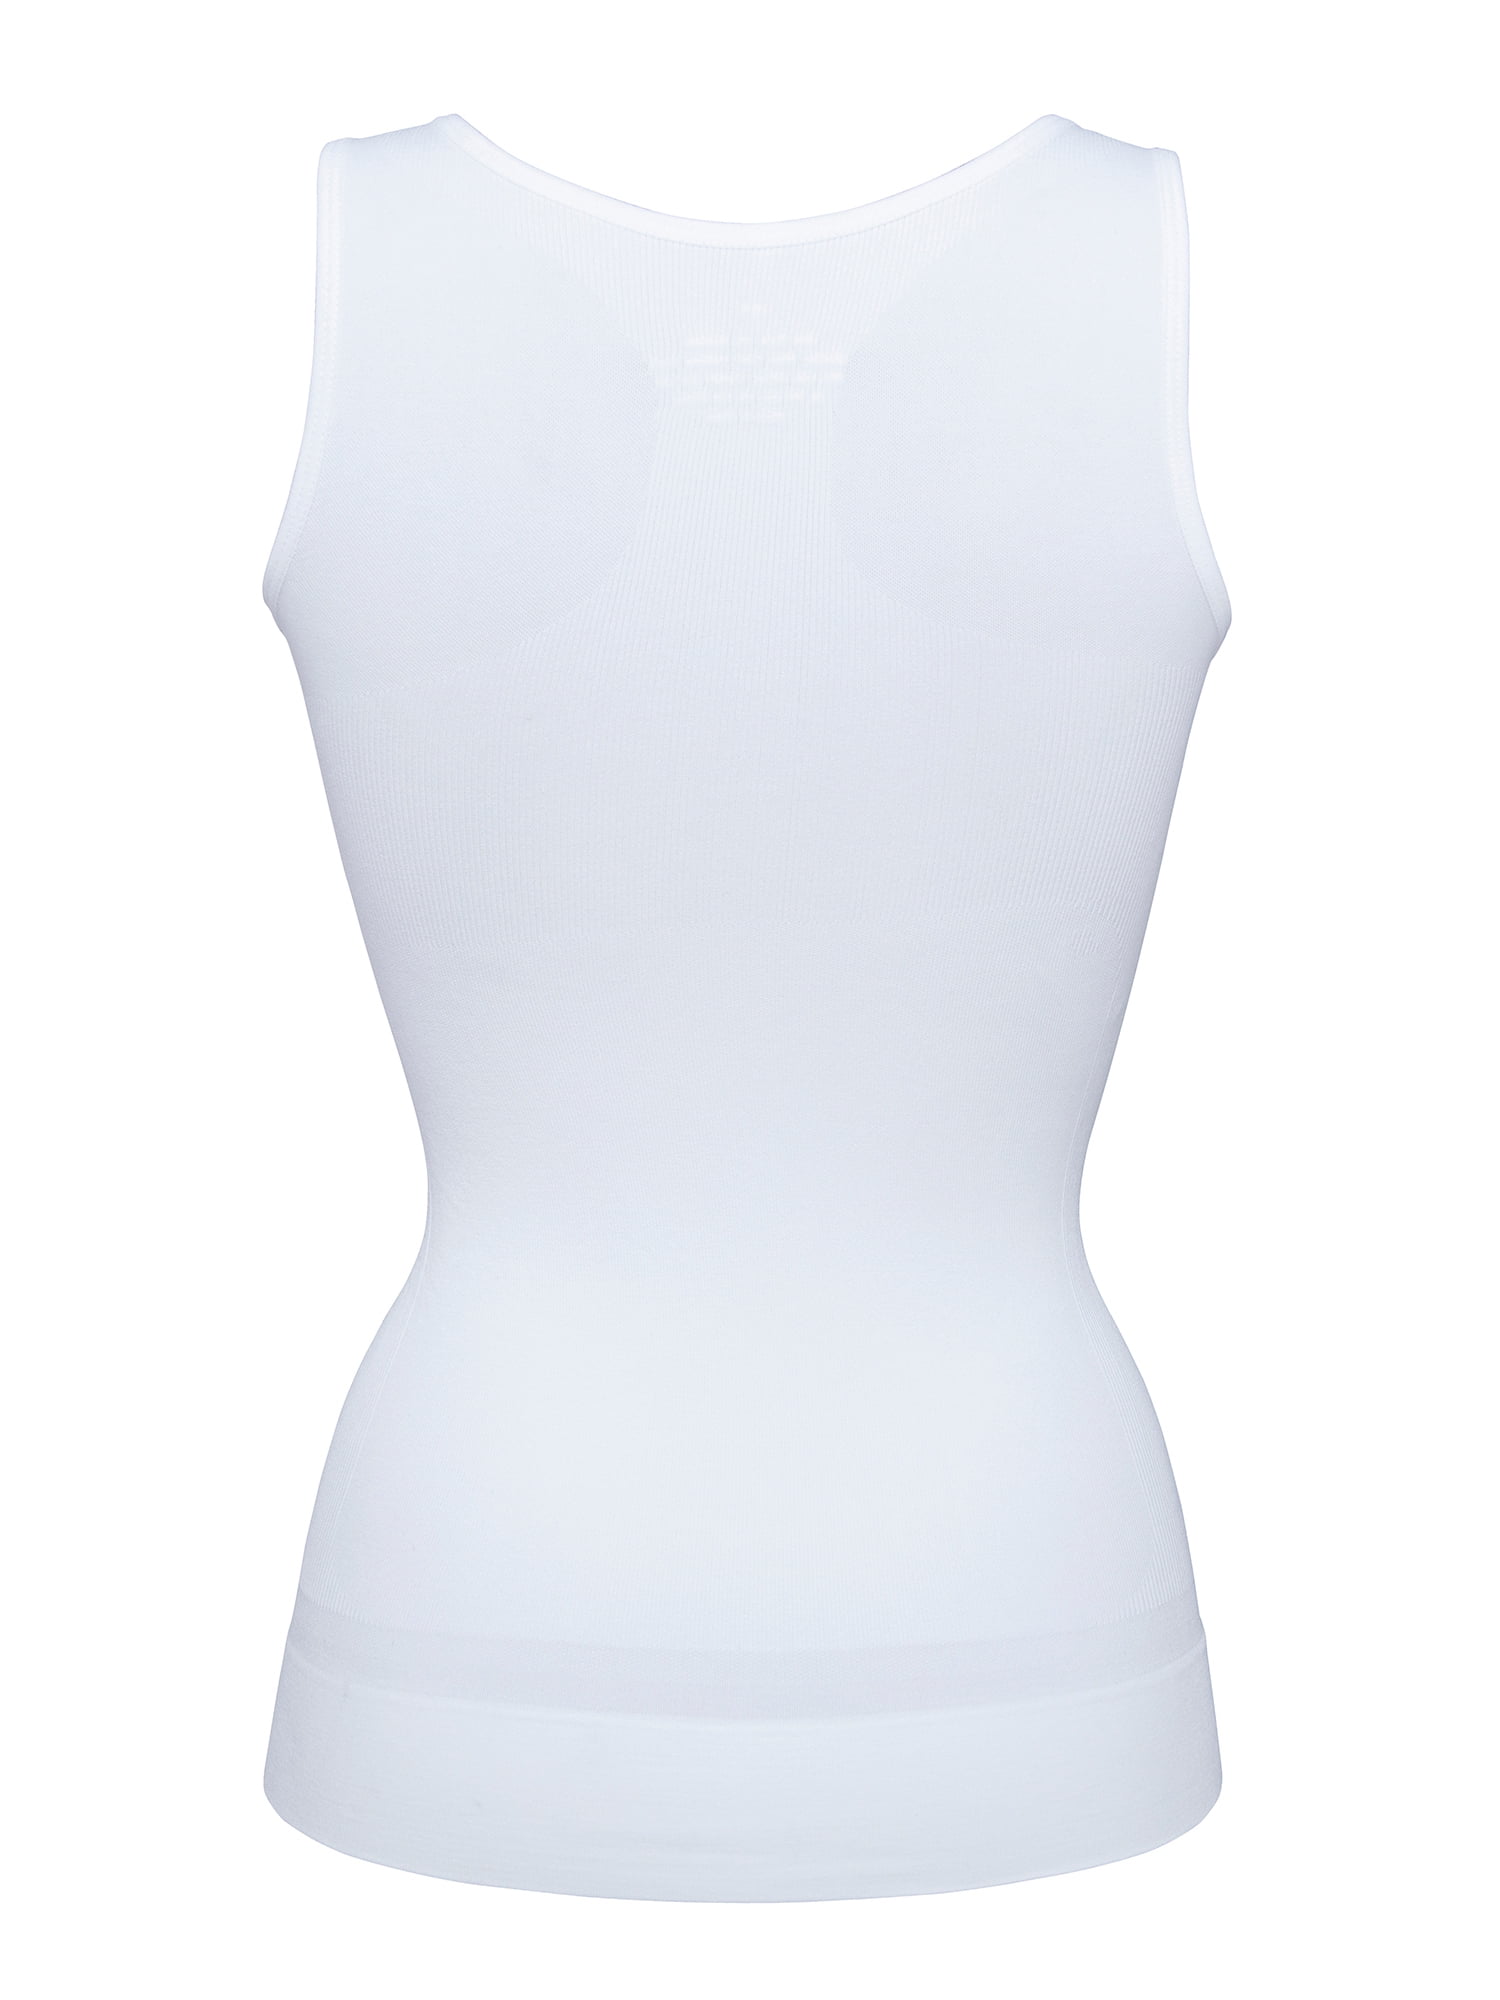 B.Bang Women Tummy Control Shapewear Camisole Vest with Adjustable Spaghetti Strap Sleeveless Basic Camis Tank Shaper Top 